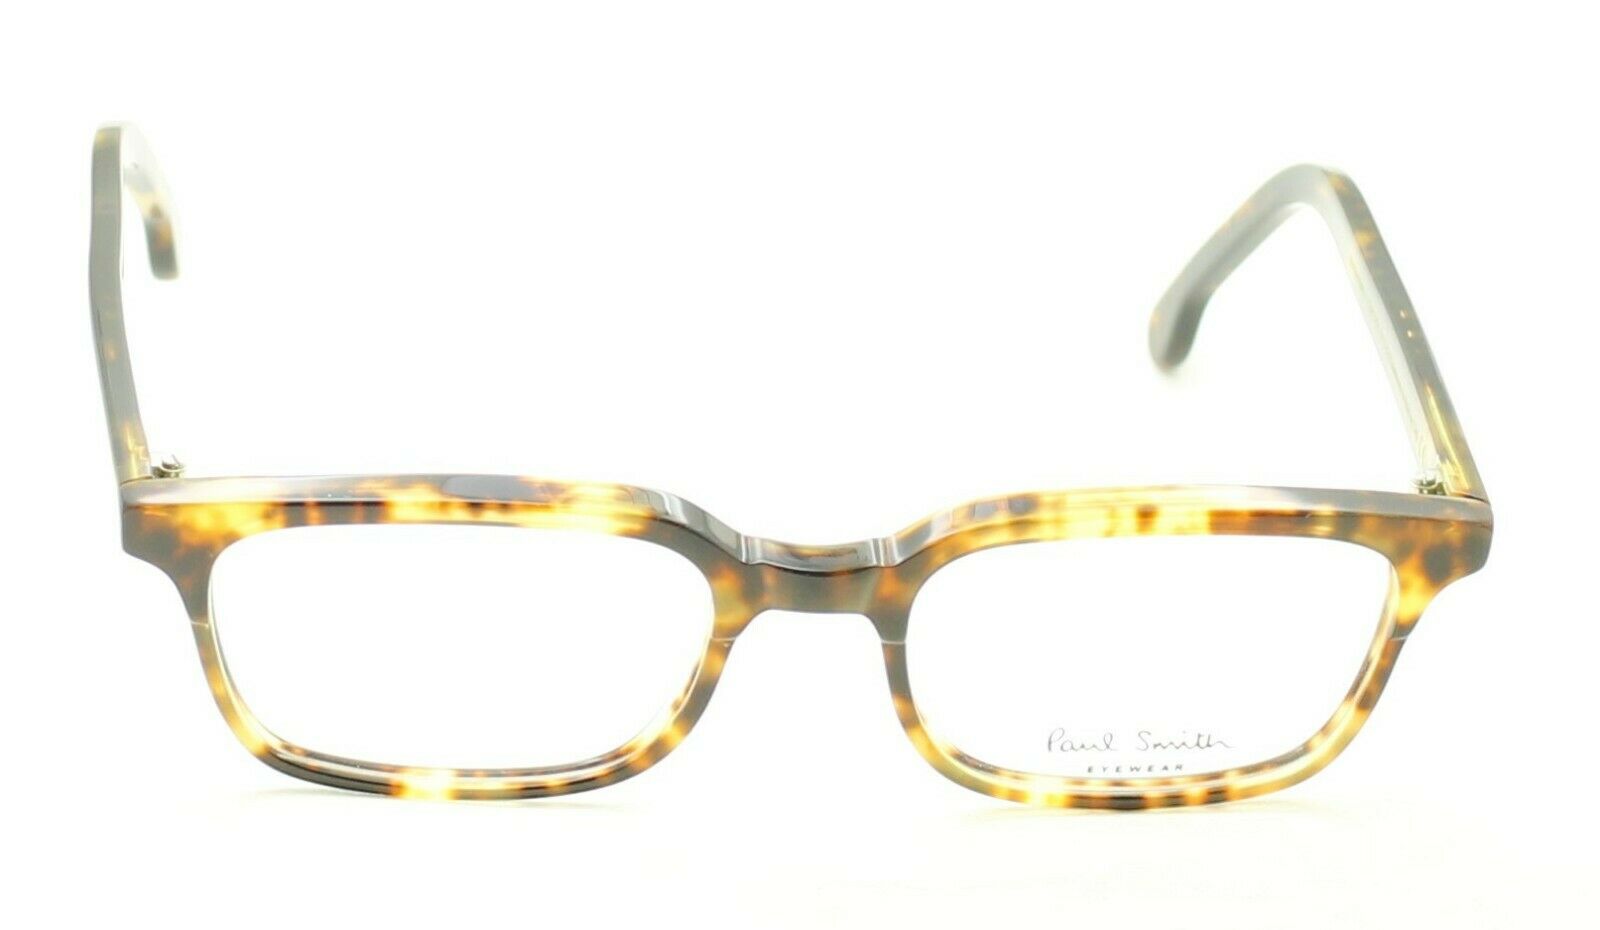 PAUL SMITH PSOP002V1 C:02 Adelaide Eyewear FRAMES RX Optical Glasses Eyeglasses